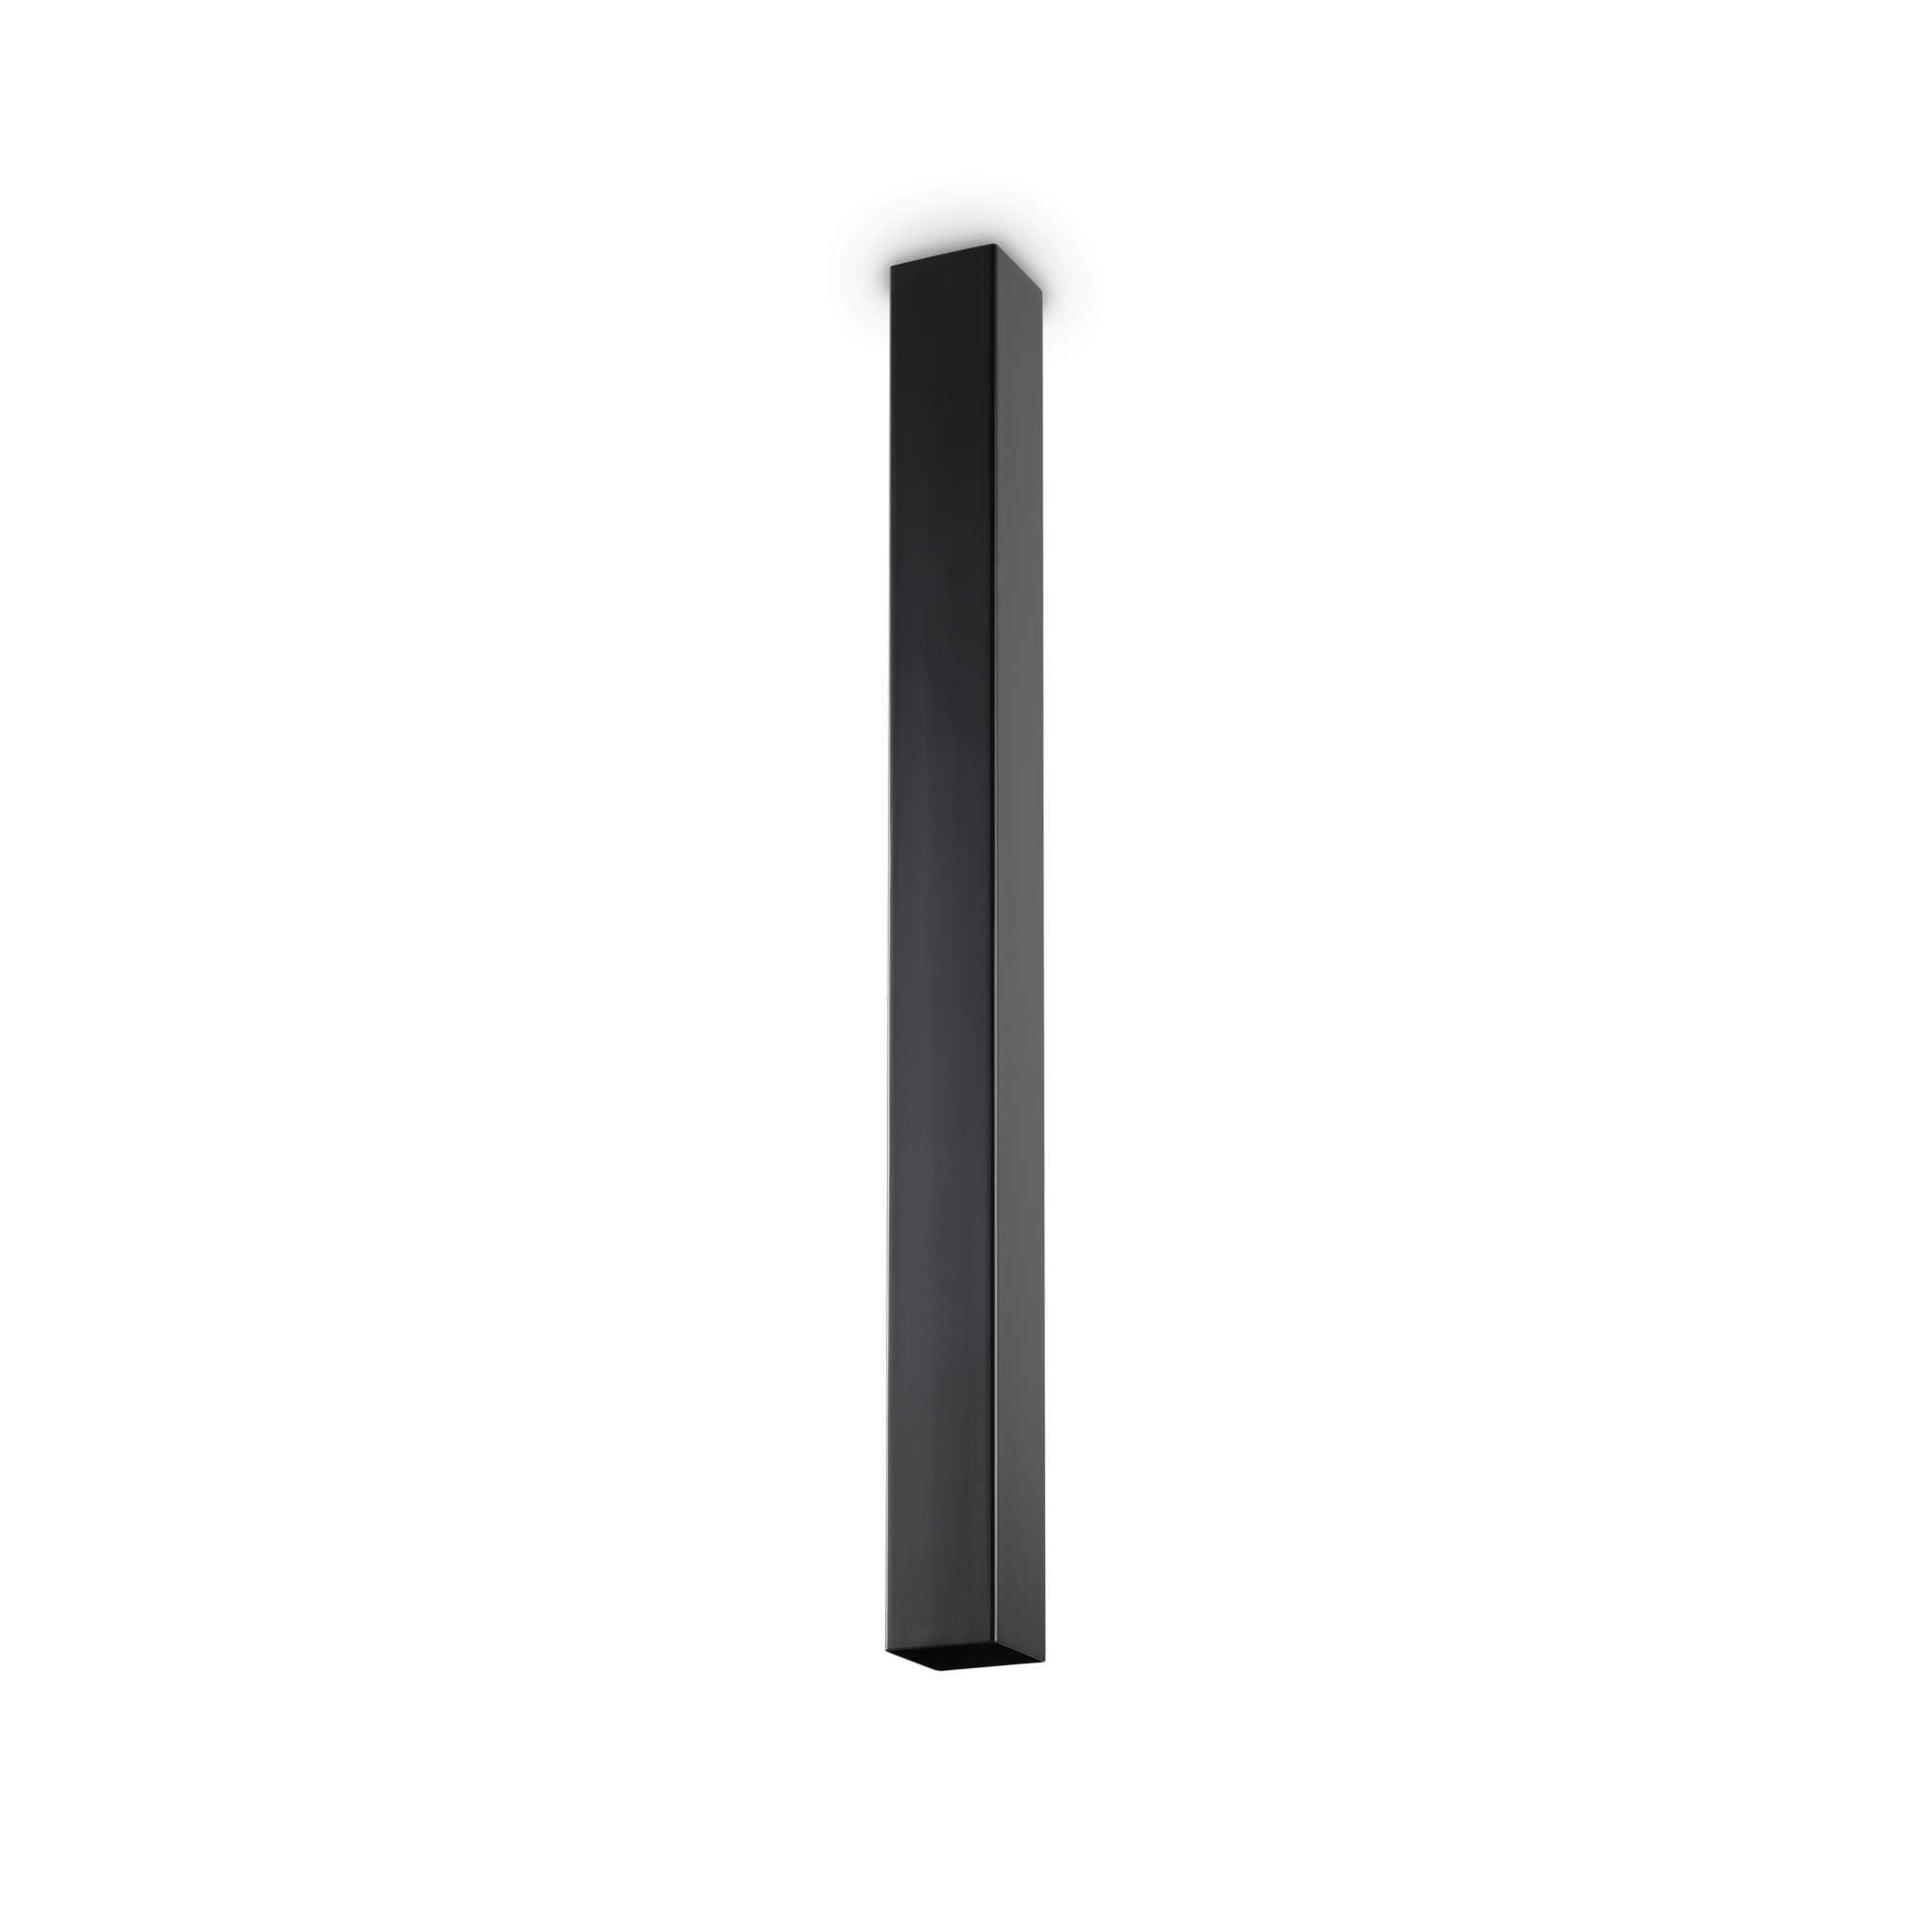 AD hotelska oprema Stropna lampa Sky visina 75 cm - Crne boje slika proizvoda